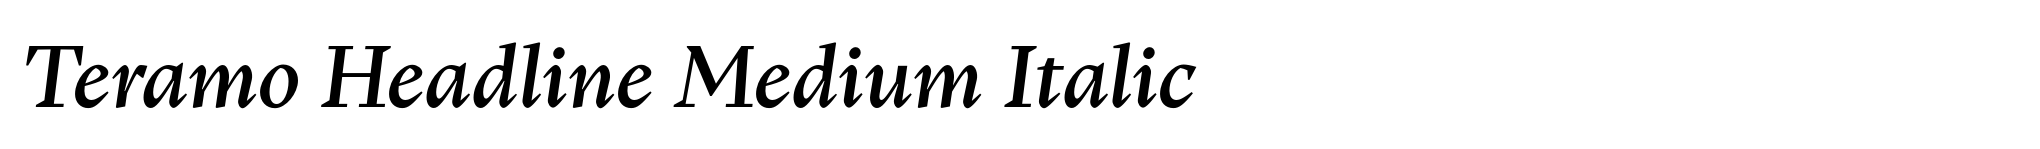 Teramo Headline Medium Italic image